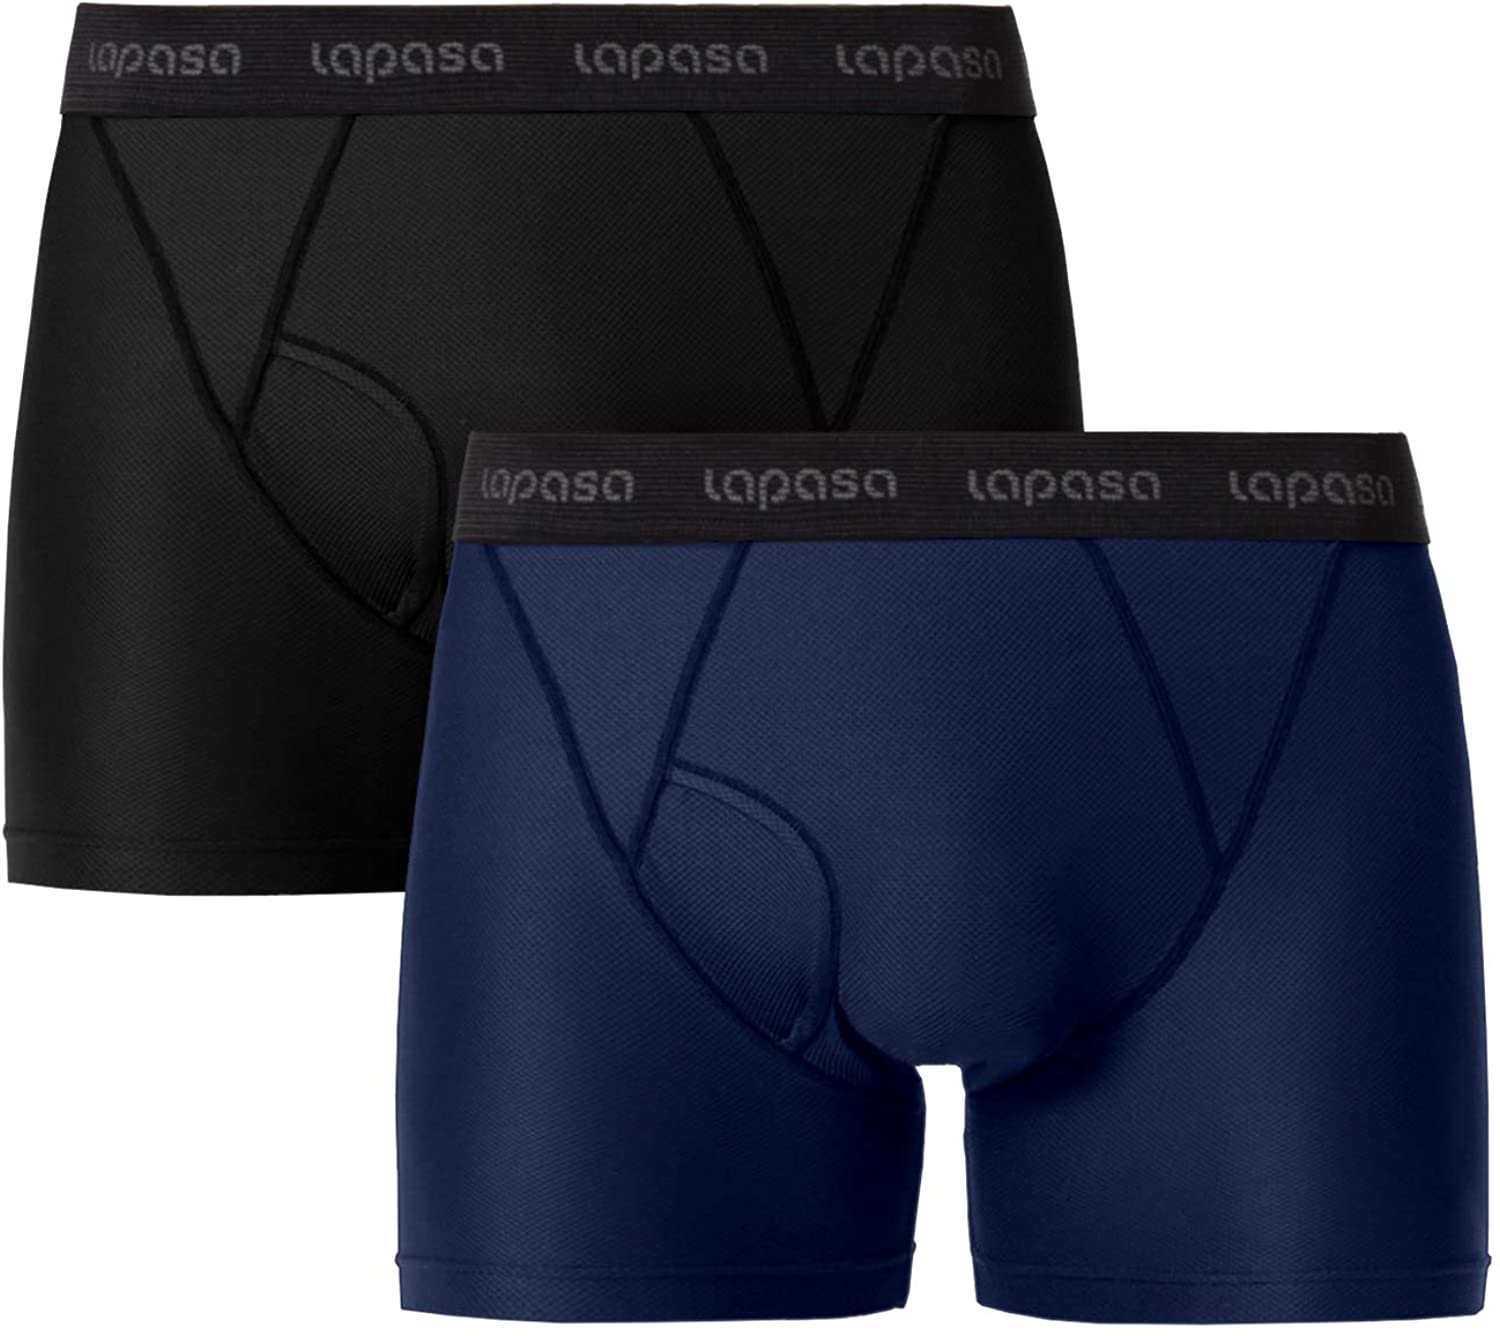 LAPASA Men's 2 Pack Quick Dry Travel Underwear Breathable Mesh Boxer Briefs  for